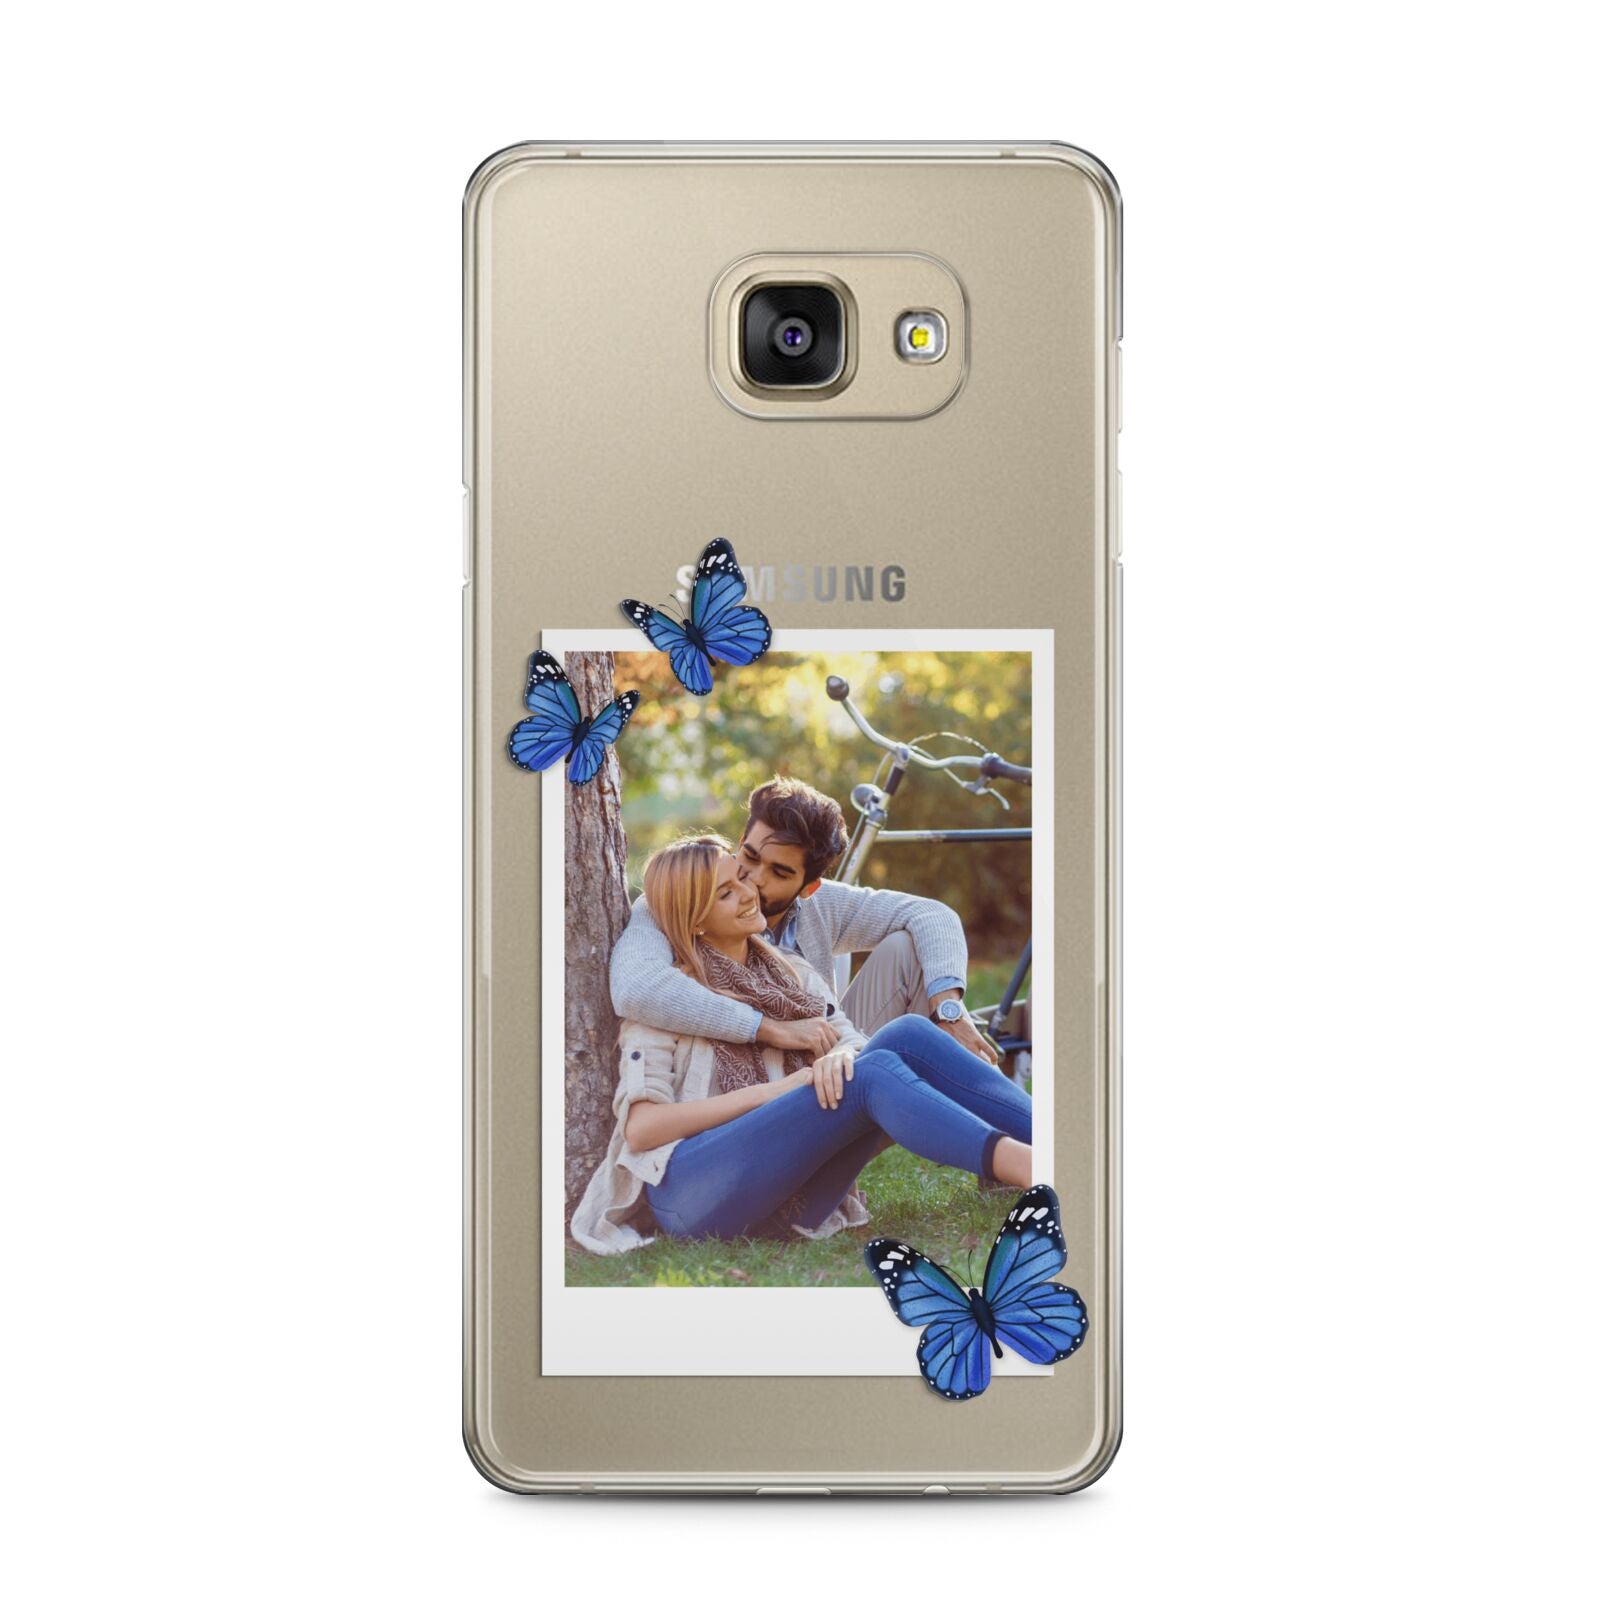 Polaroid Photo Samsung Galaxy A5 2016 Case on gold phone